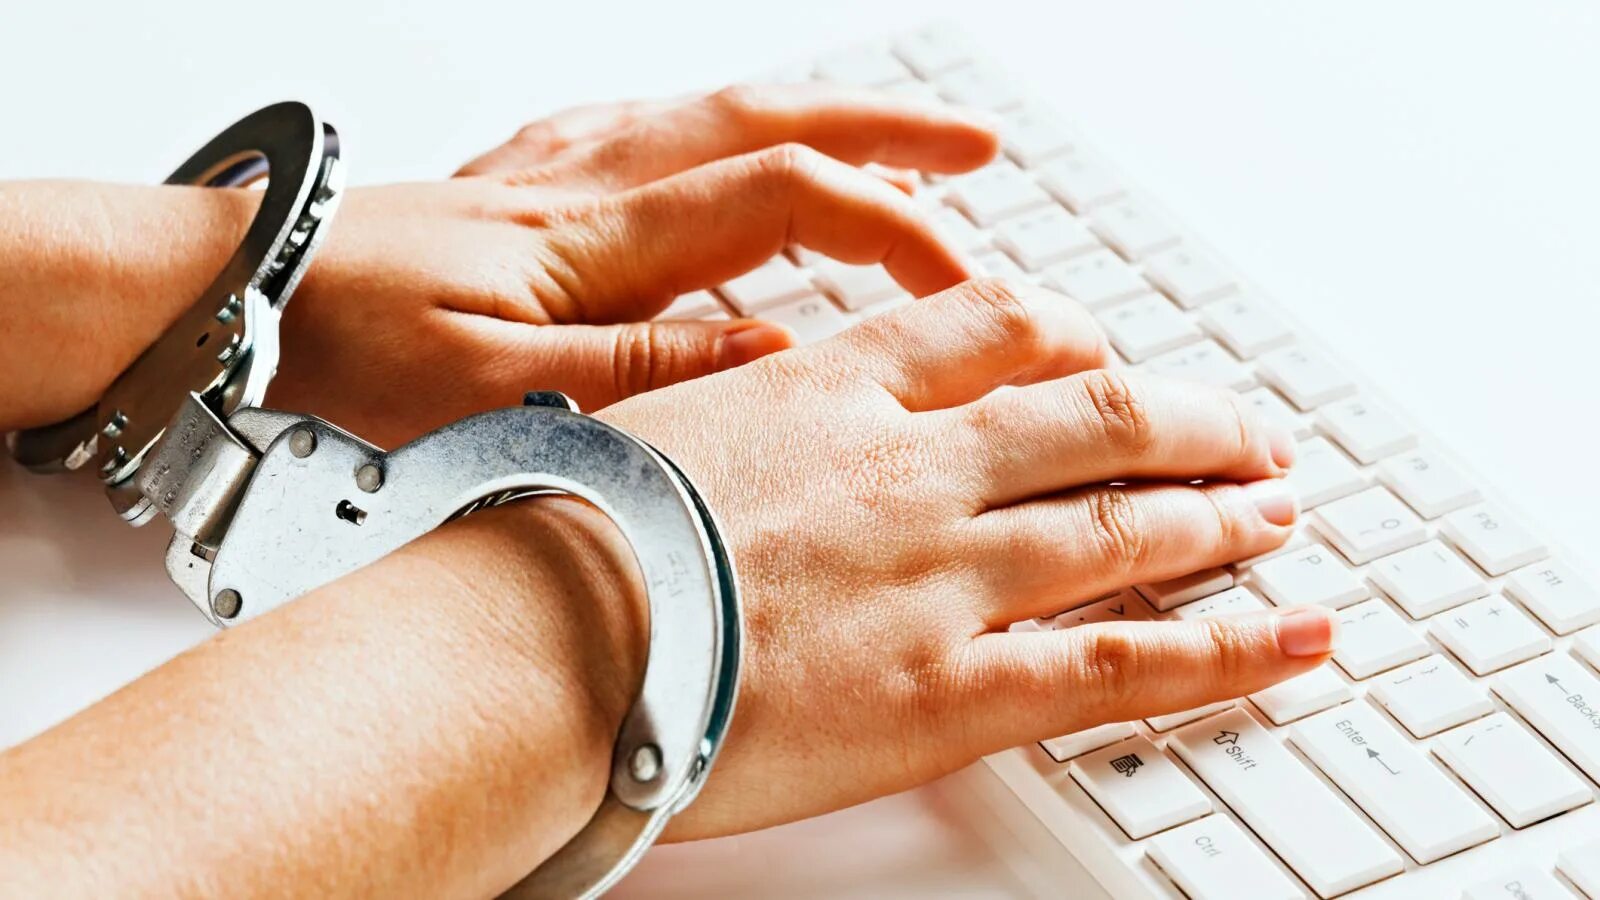 Наручники на клавиатуре. Ноутбук и наручники. В наручниках за компьютером. Руки в наручниках.